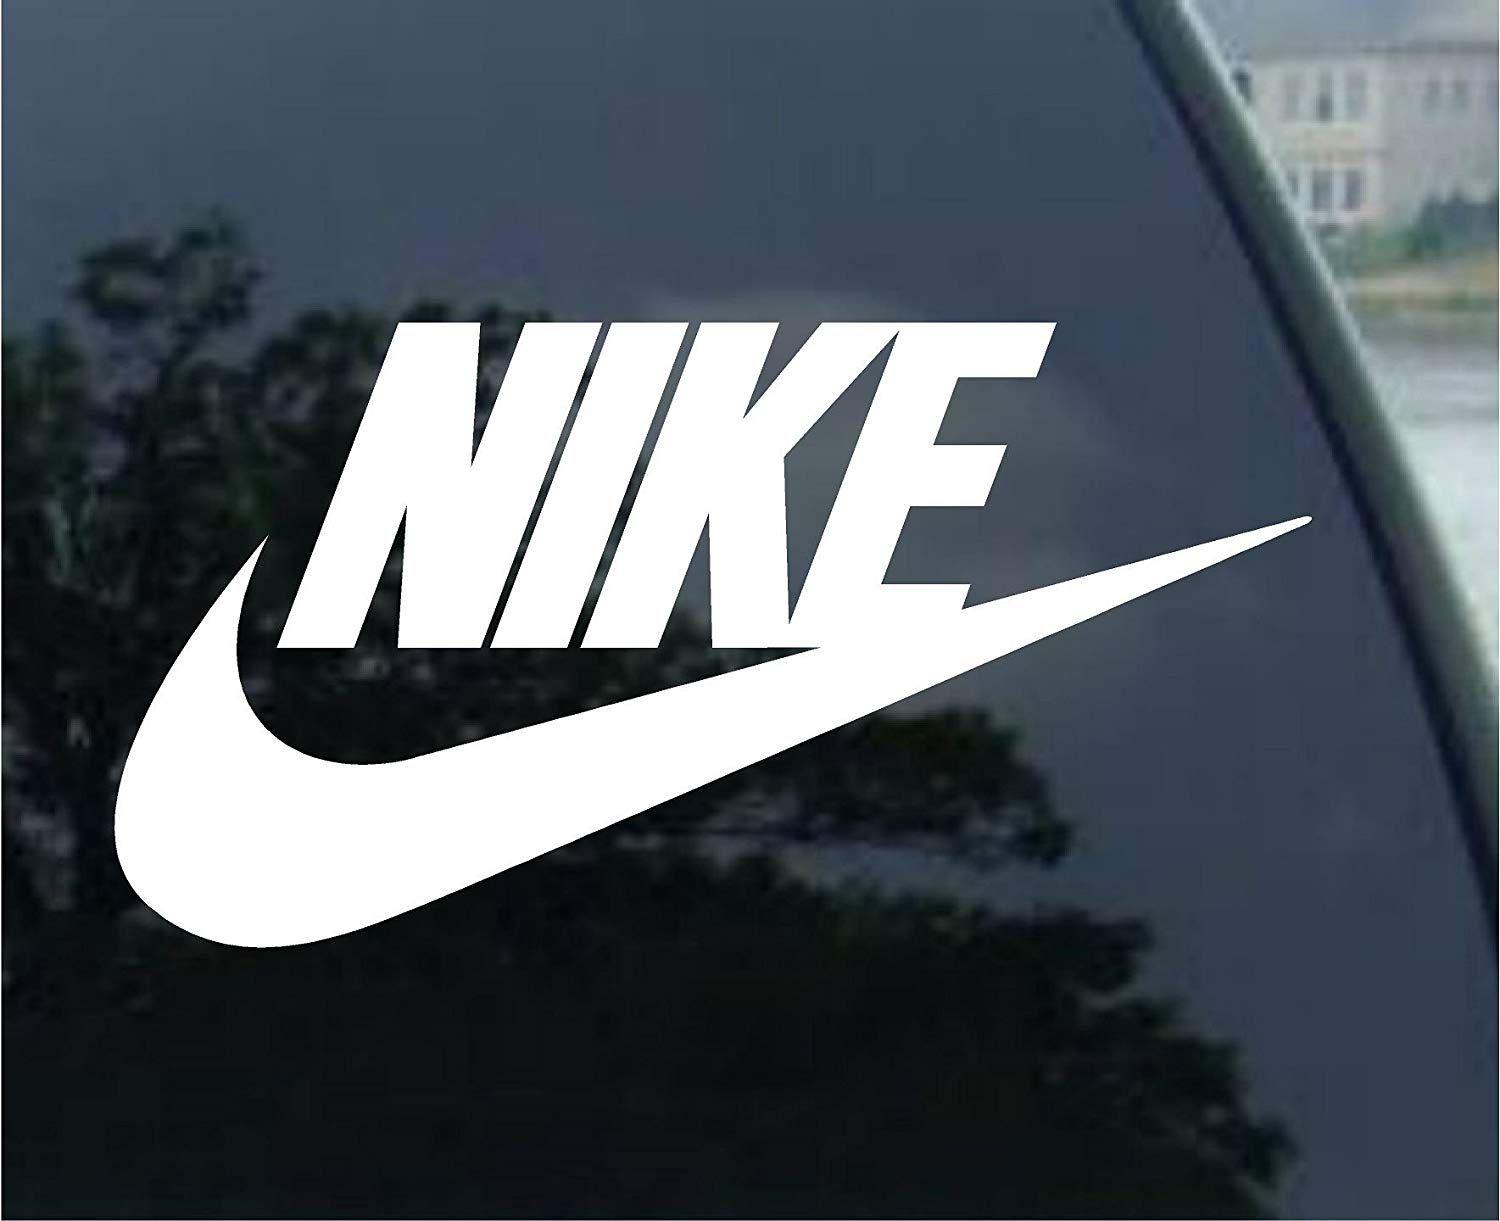 Nilke Logo - Amazon.com: Crawford Graphix Nike Logo - Vinyl Sticker Decal (12 ...